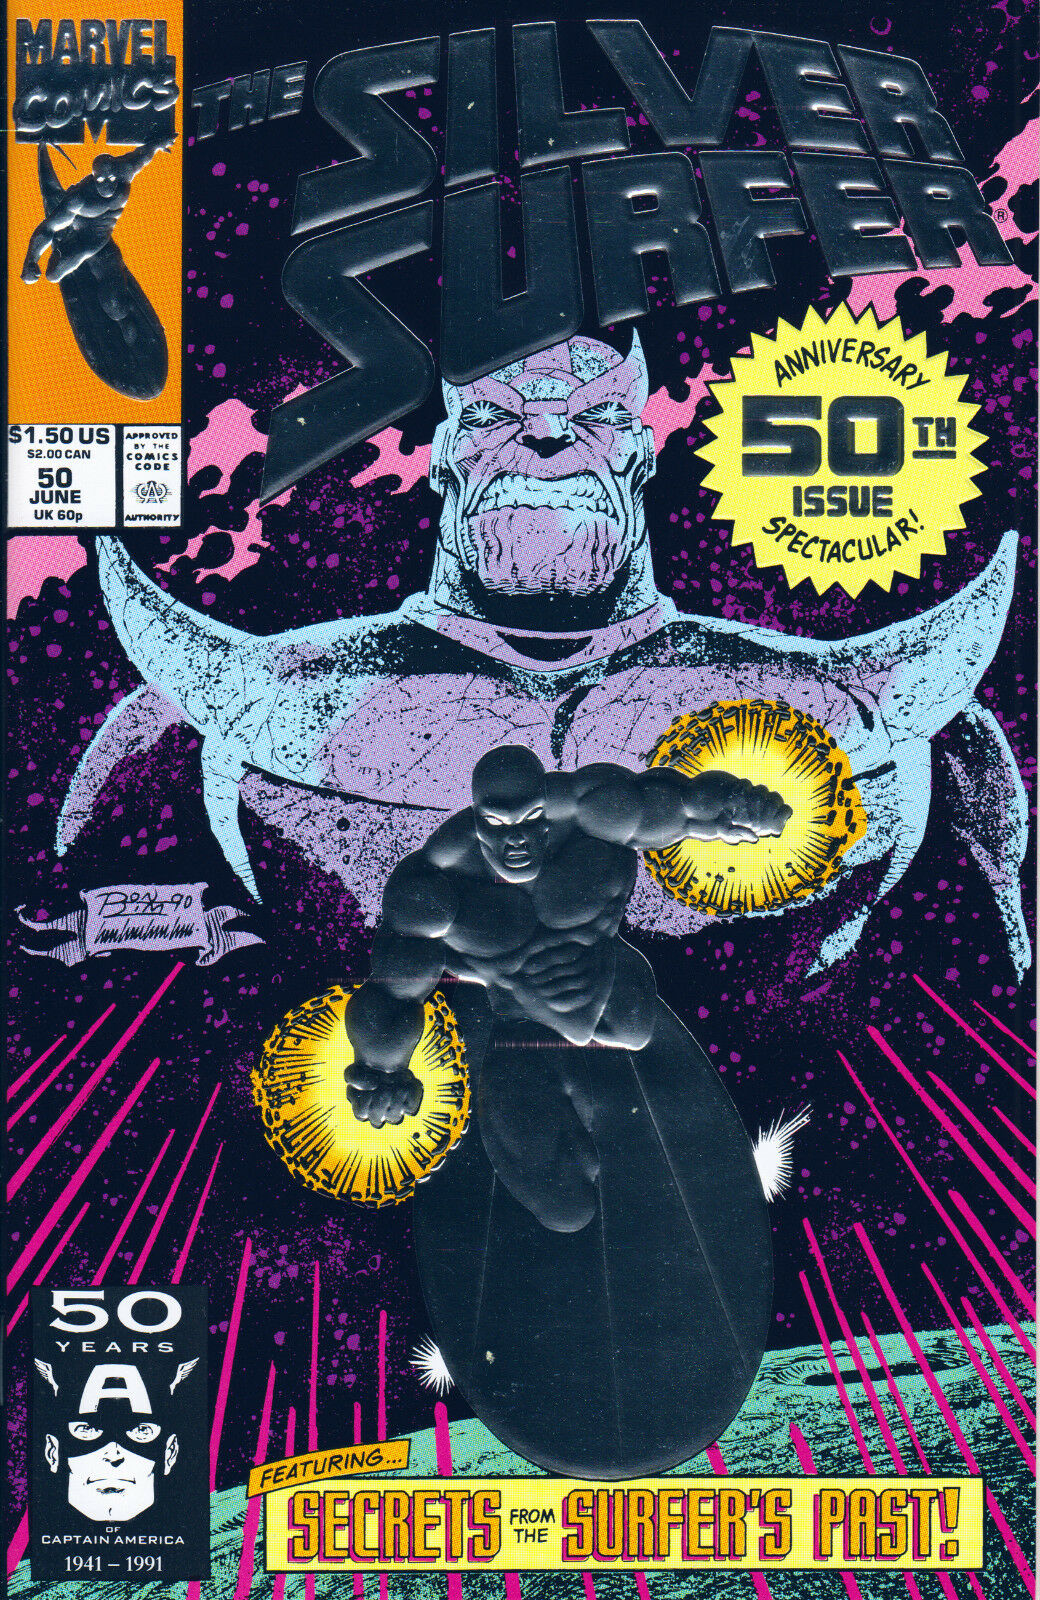 SILVER SURFER #50 (1ST PRINT)(FOIL EMBOSSED COVER) ~ Marvel Comics